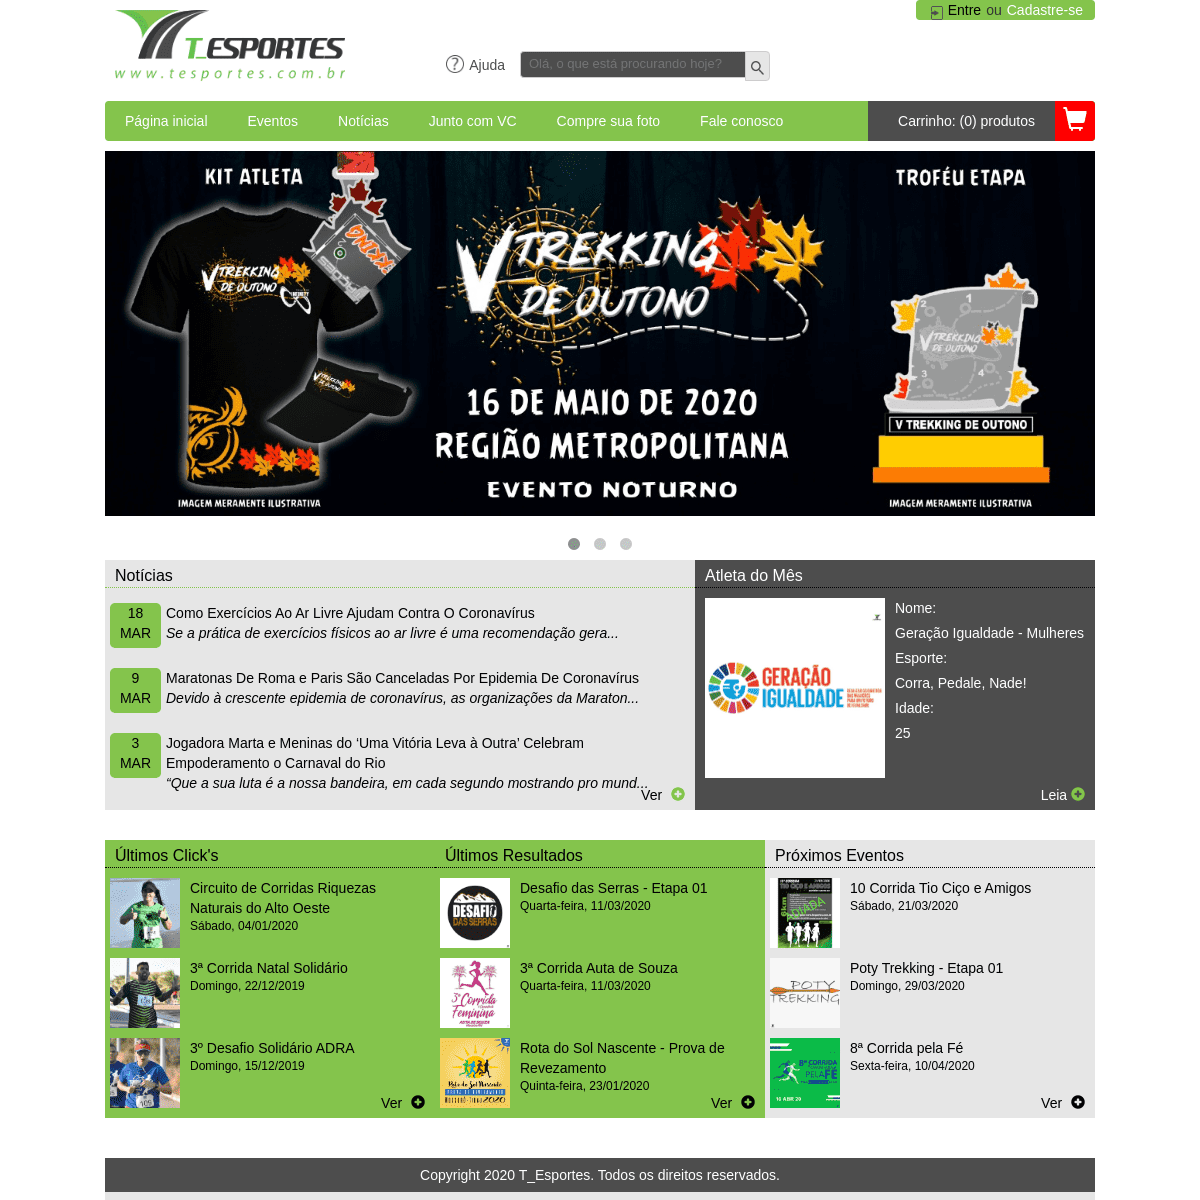 A complete backup of tesportes.com.br